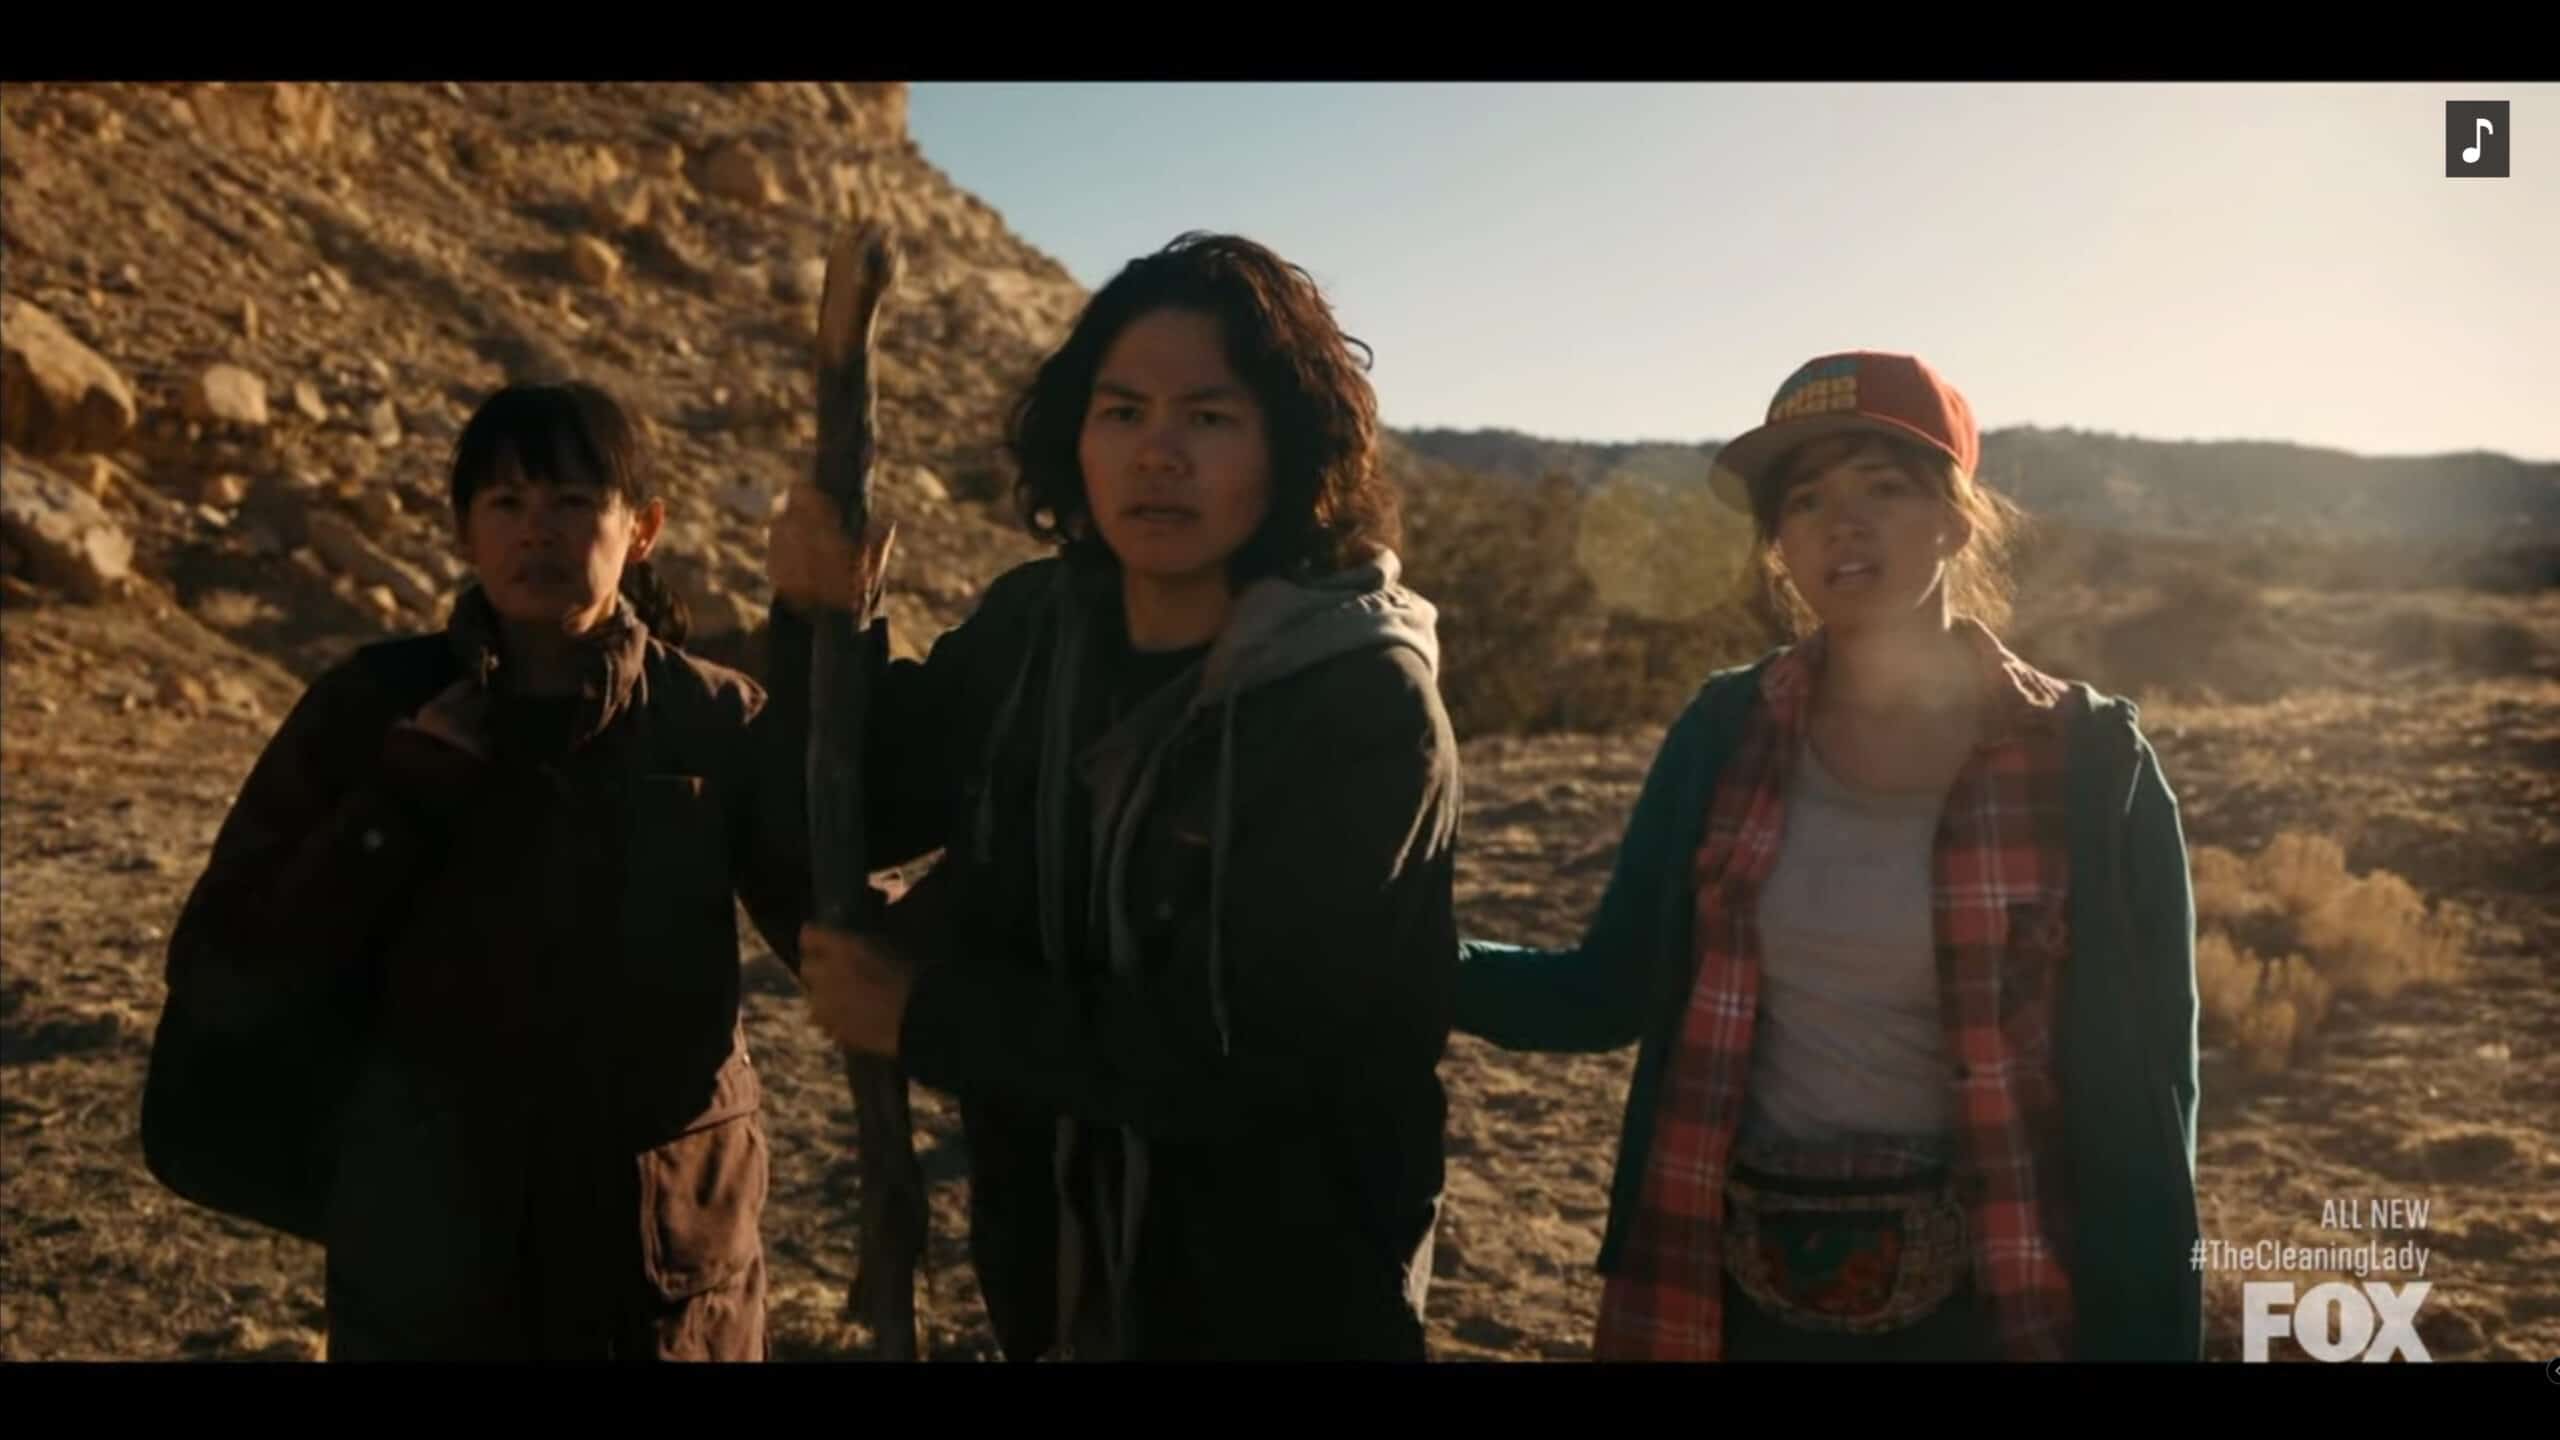 Martha Millan as Fiona, Sean Lew as Chris, and Esmeralda Camargo as Camilla in the desert